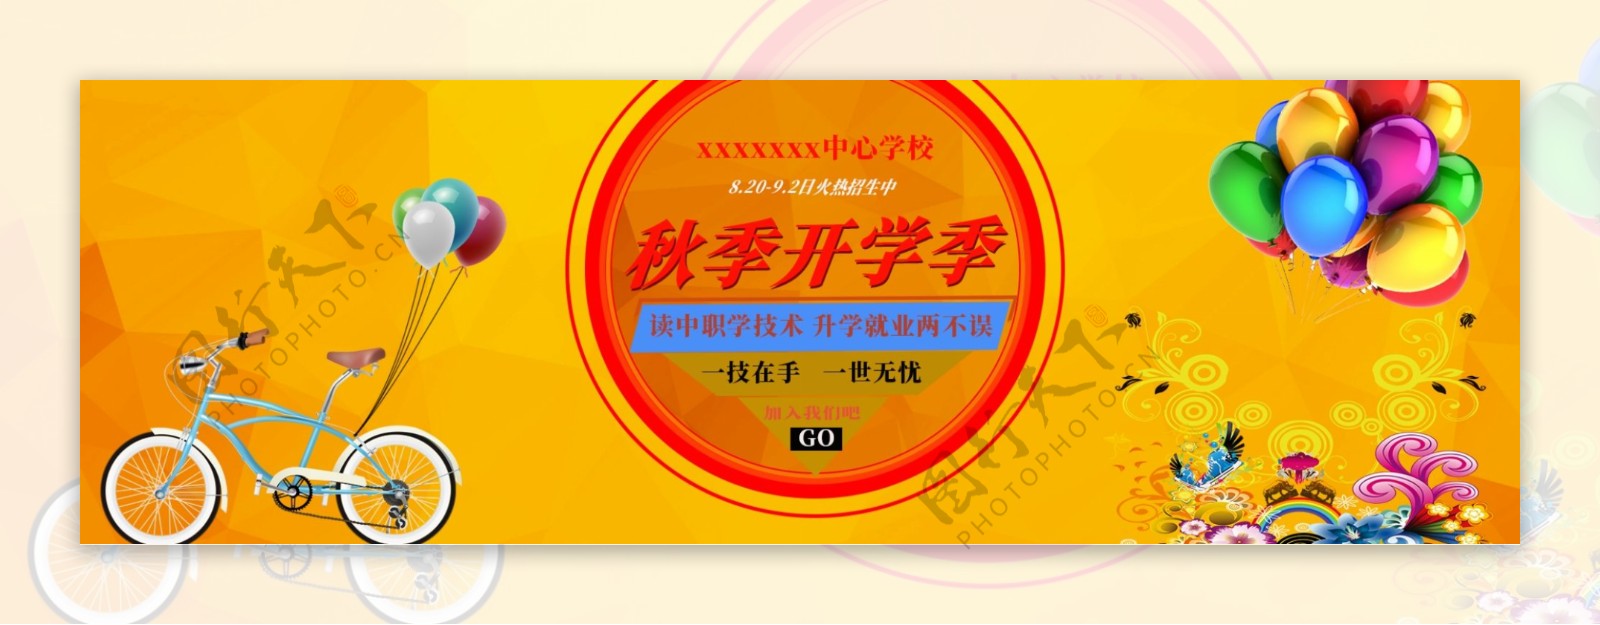 淘宝38女王节海报banner电商